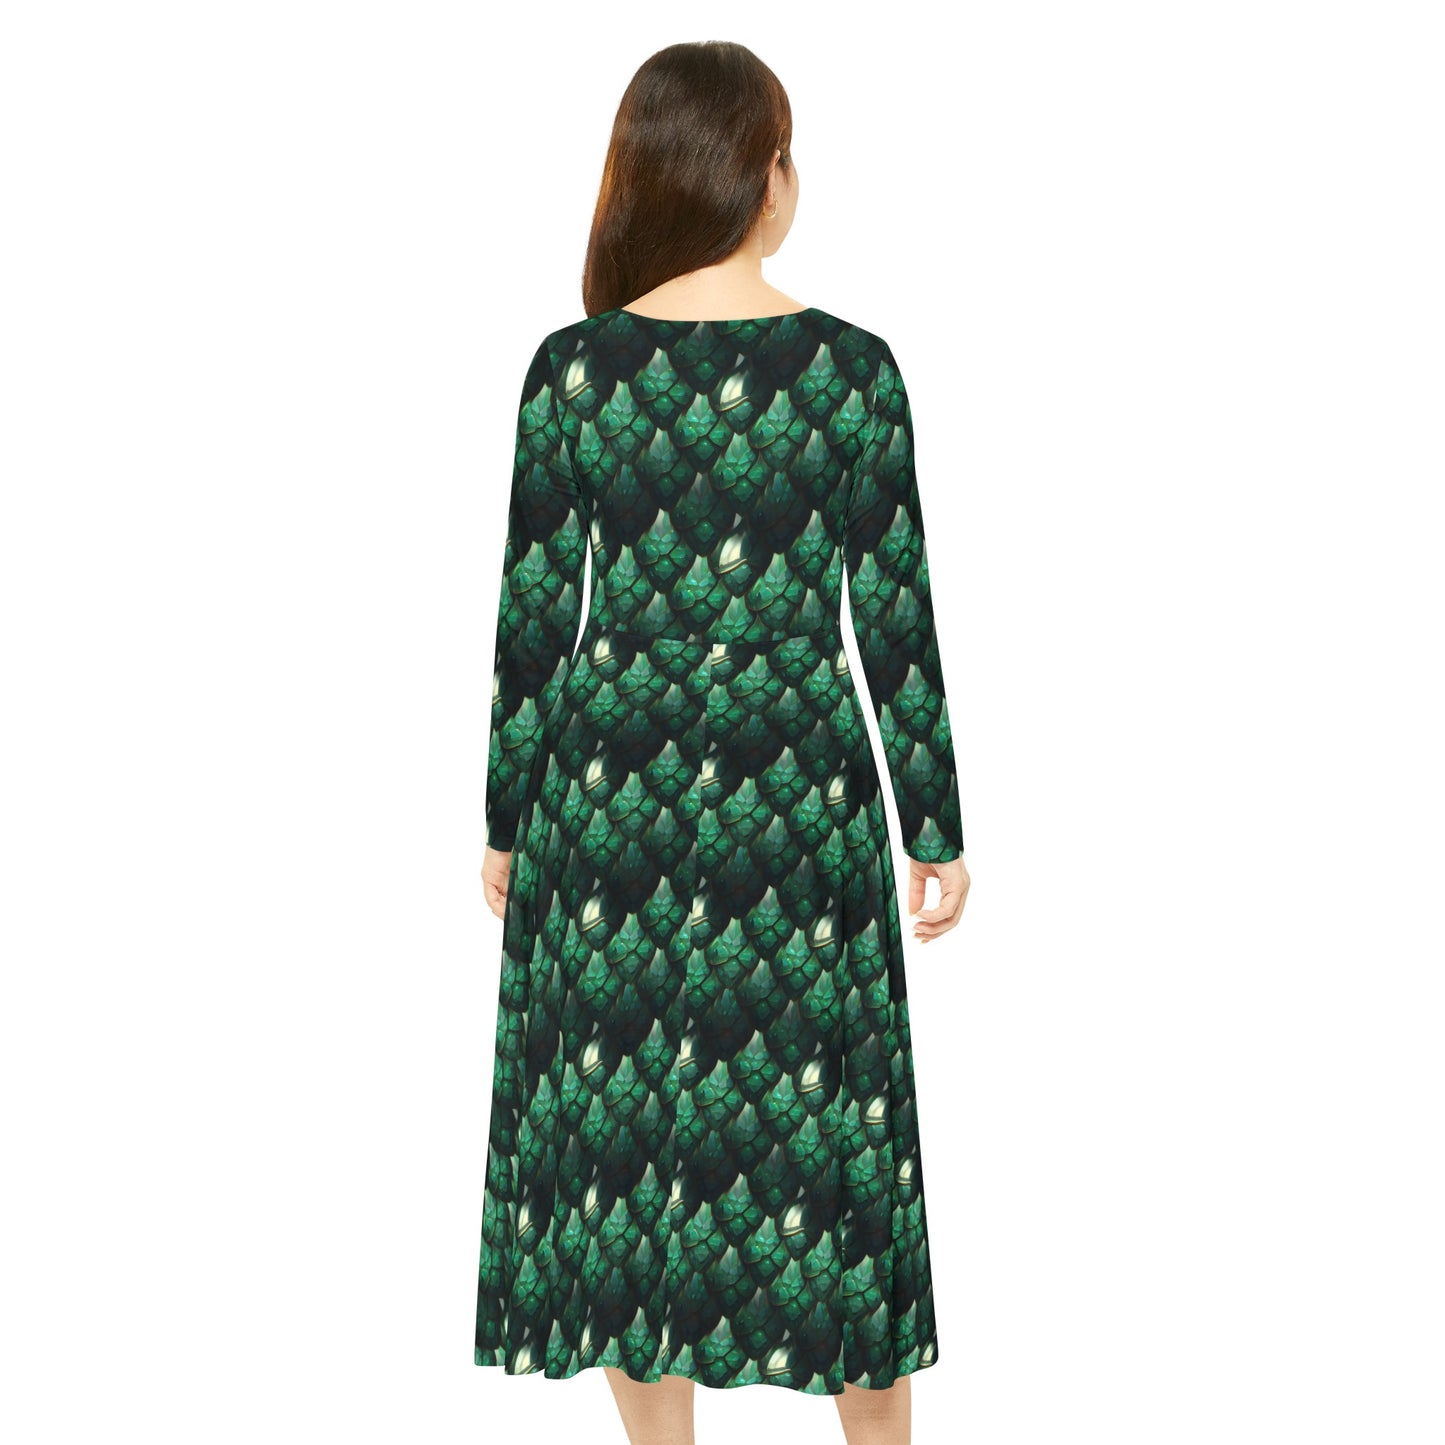 Emerald Scale Print Long Sleeve Dance Dress